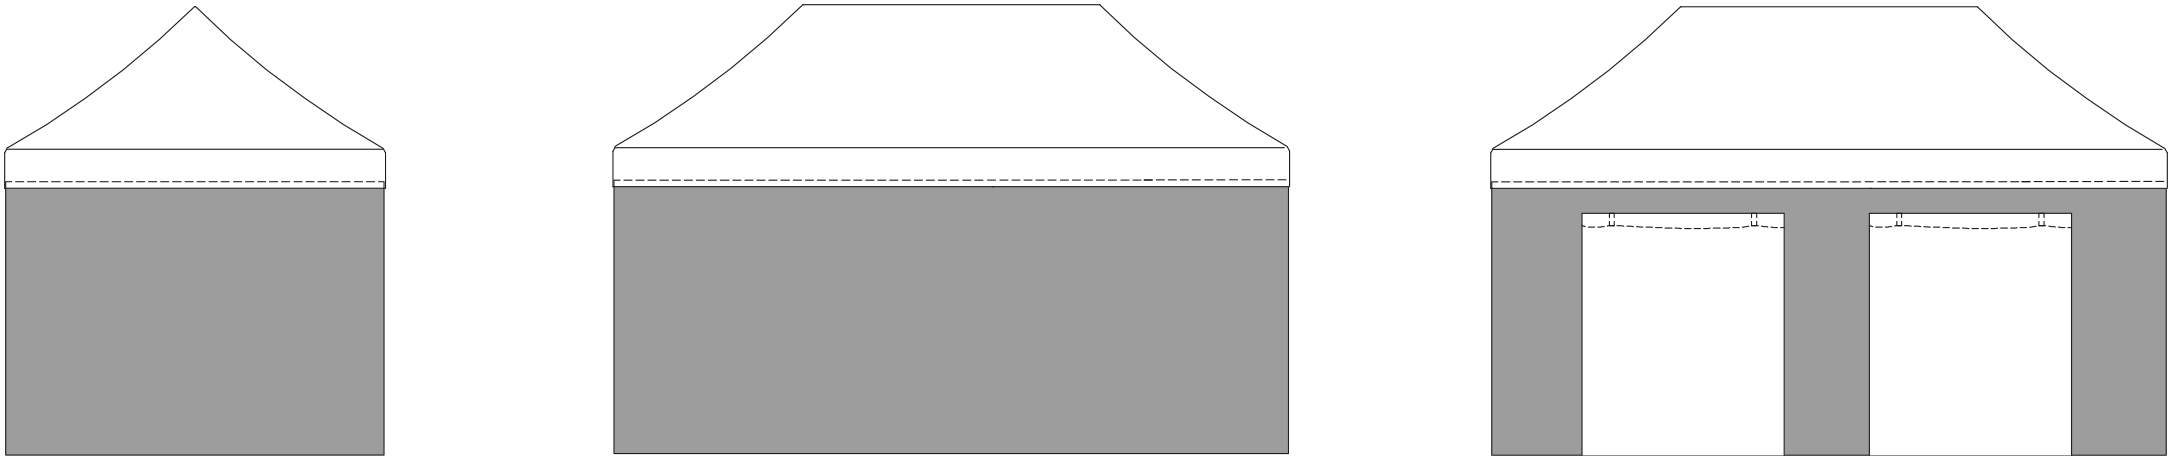 4 wall kit for gazebo 4x8m/ 1 wall with door (8m)+ 1 plain wall, (8m) + 2 plain walls (4m)/ WHITE